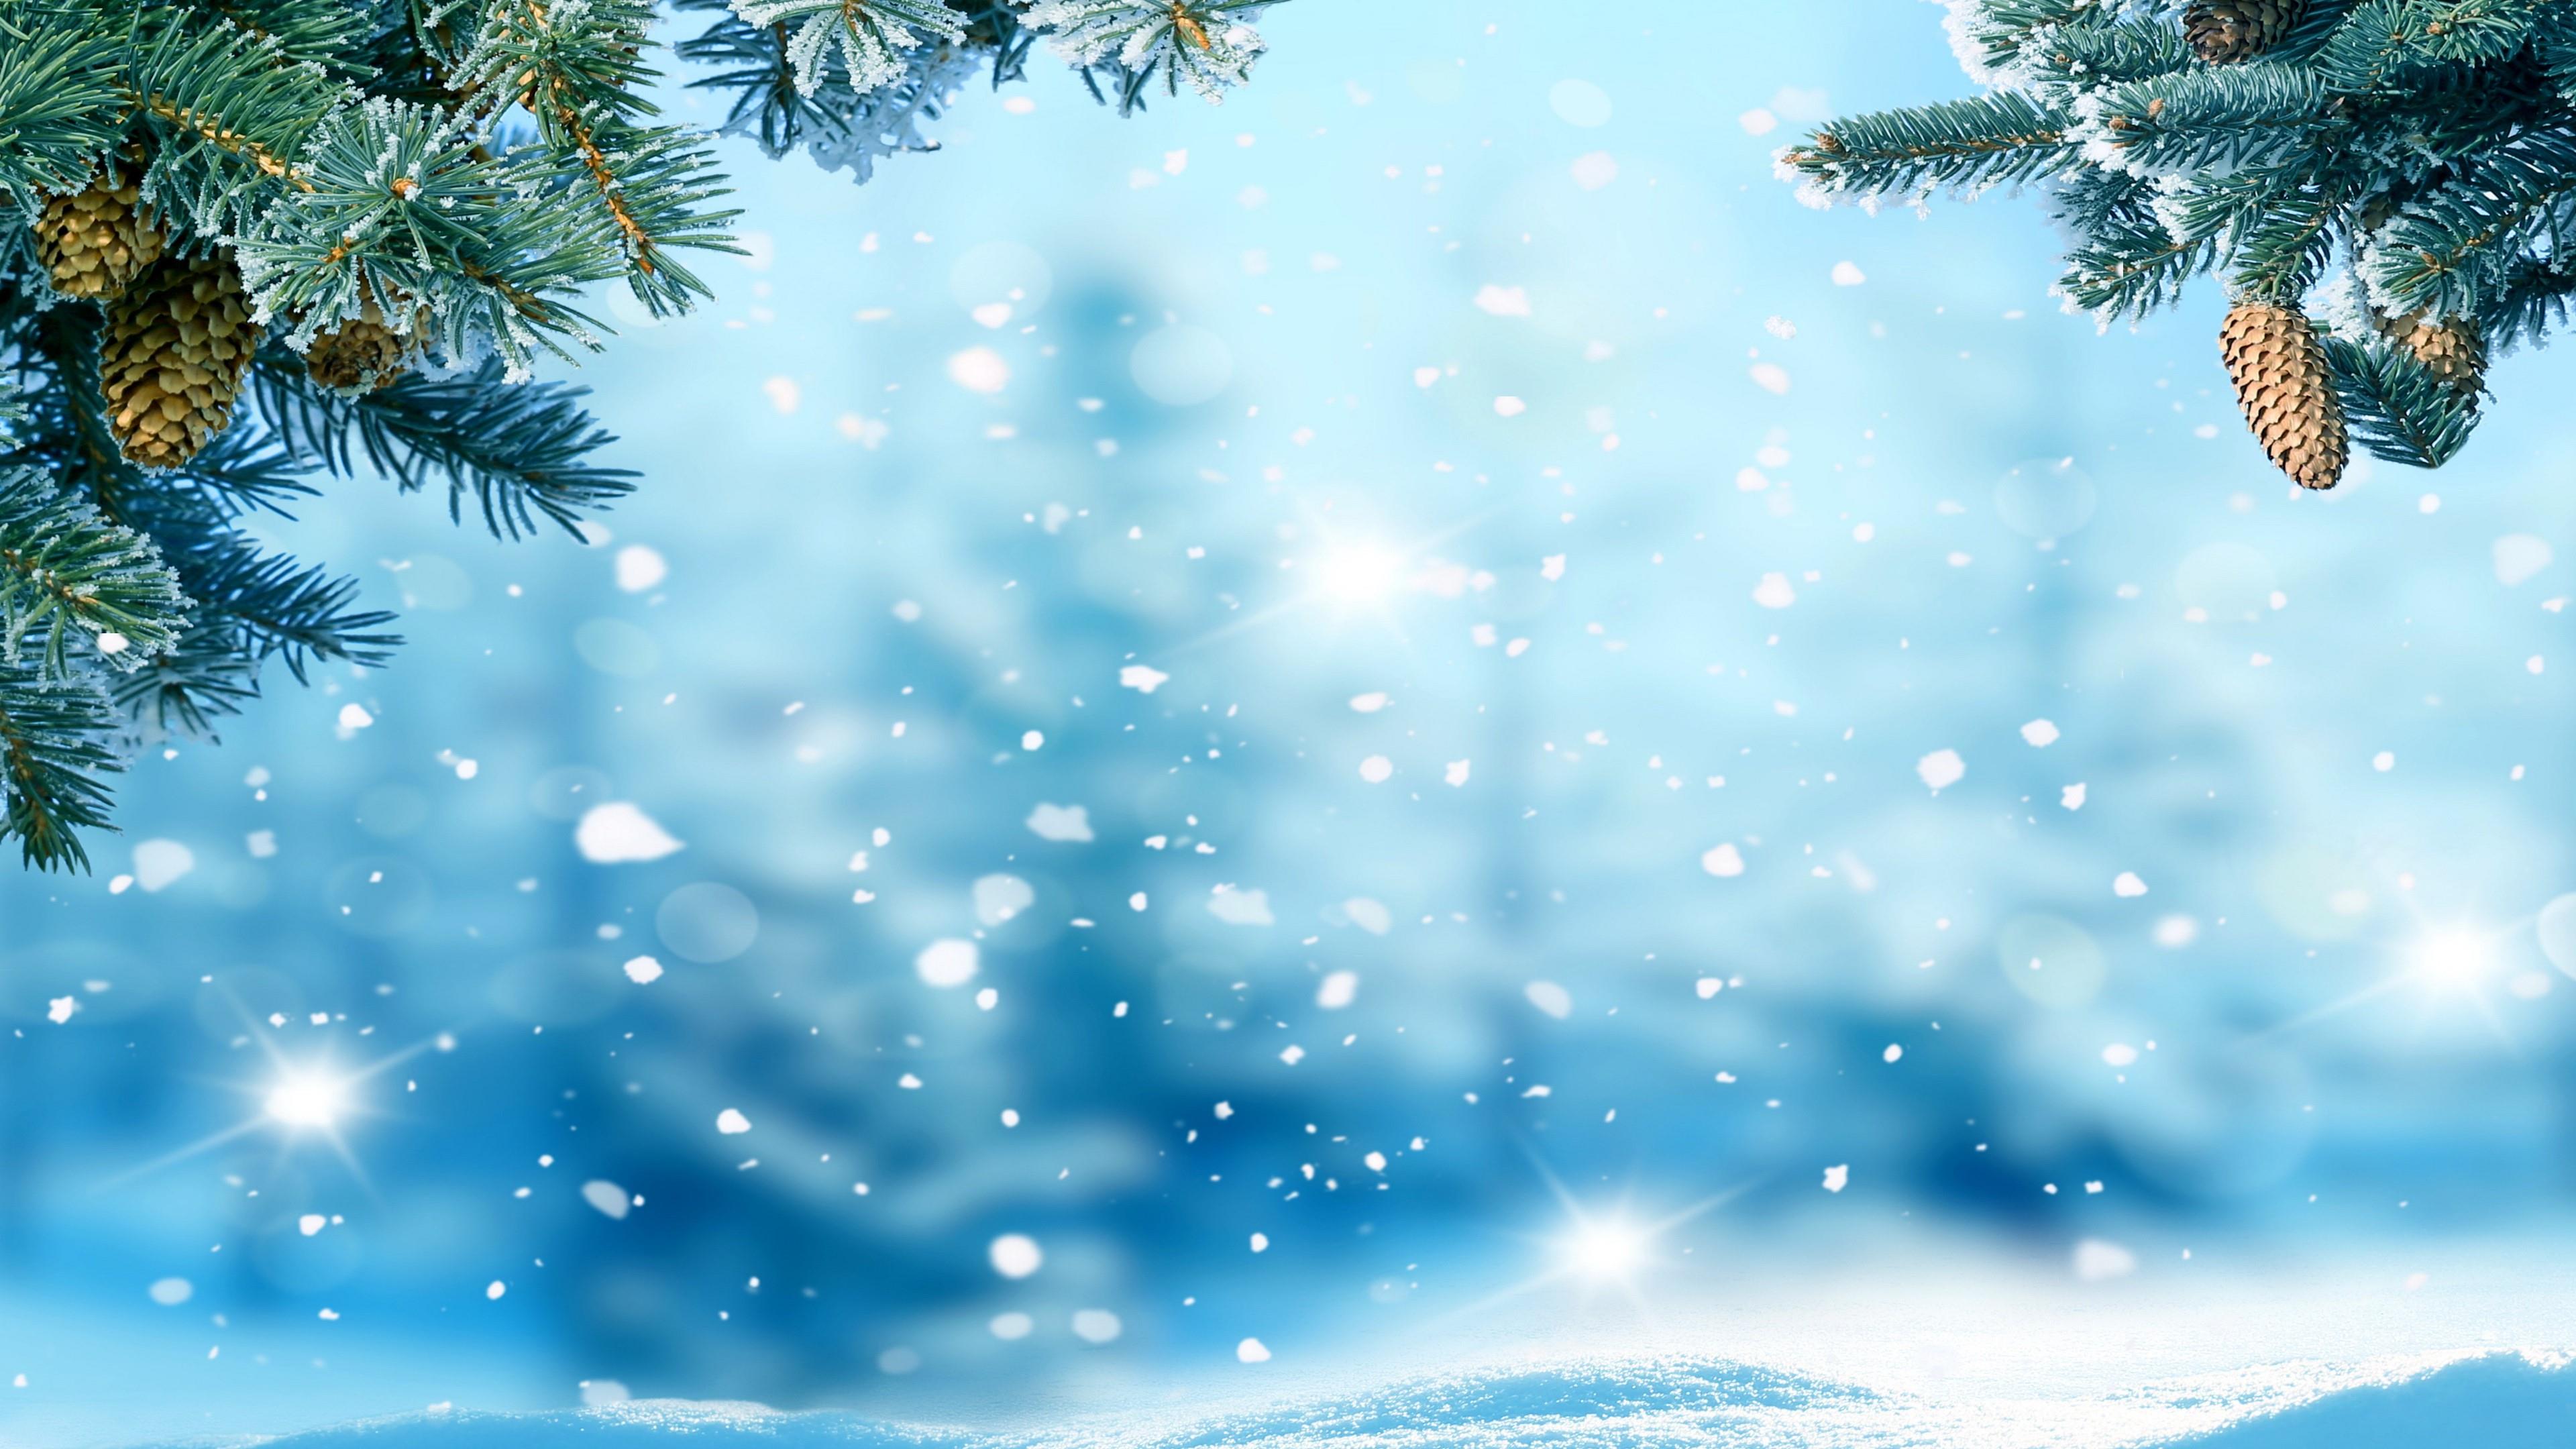 Christmas Day Snowfall 4k UltraHD Wallpaper